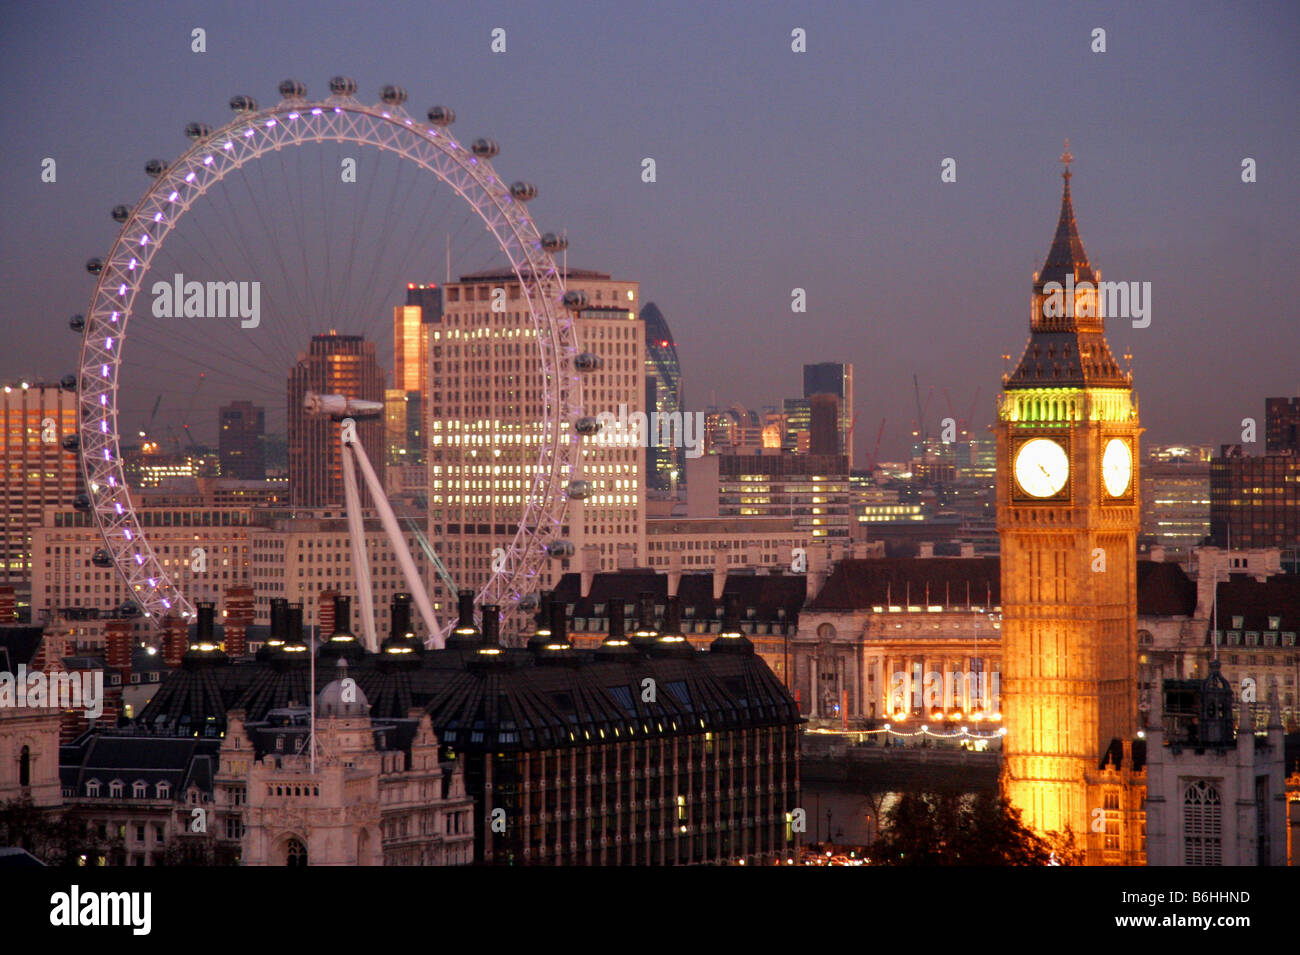 Big Ben and the London Eye illuminated at night London UK Stock Photo